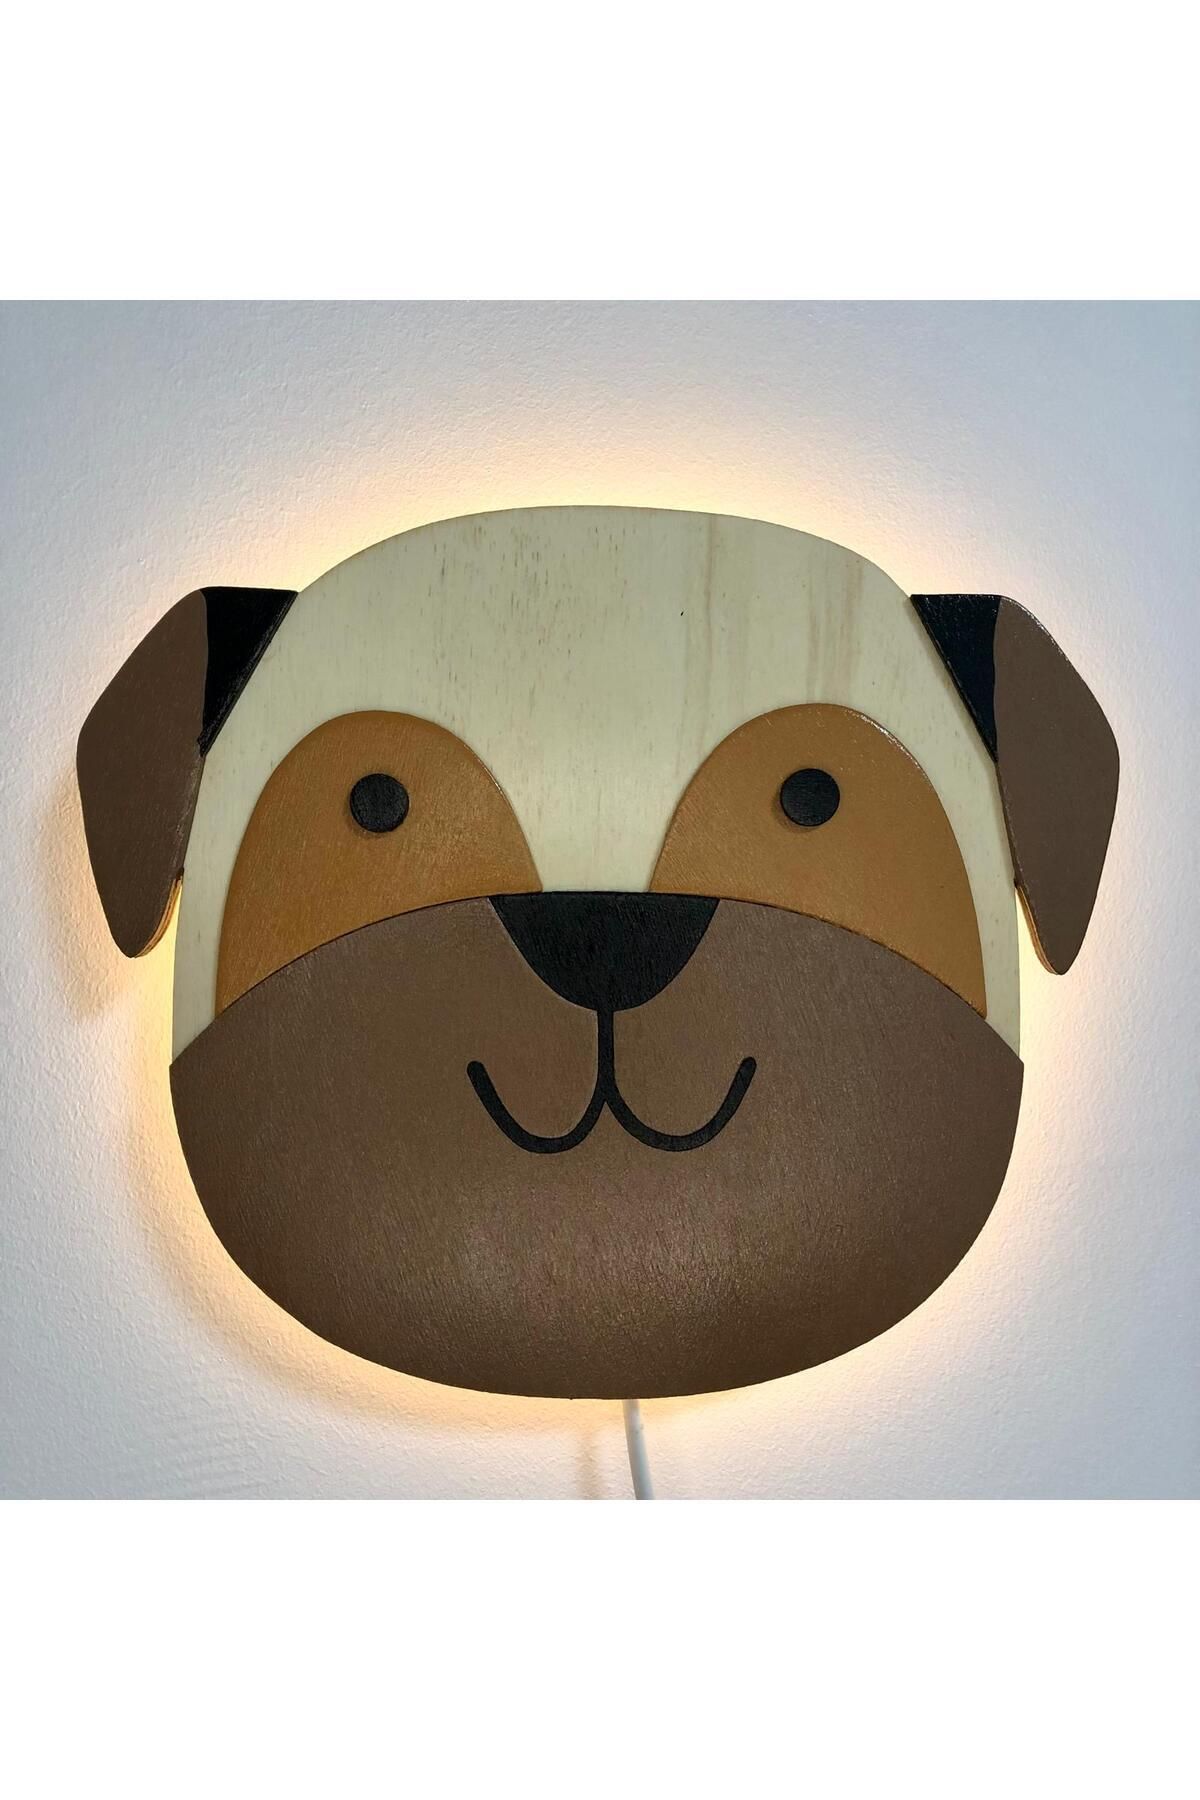 Marka Ho'okipa Bs Handcrafted - Çocuk Odası El Yapımı Ahşap Gece Lambası Köpek